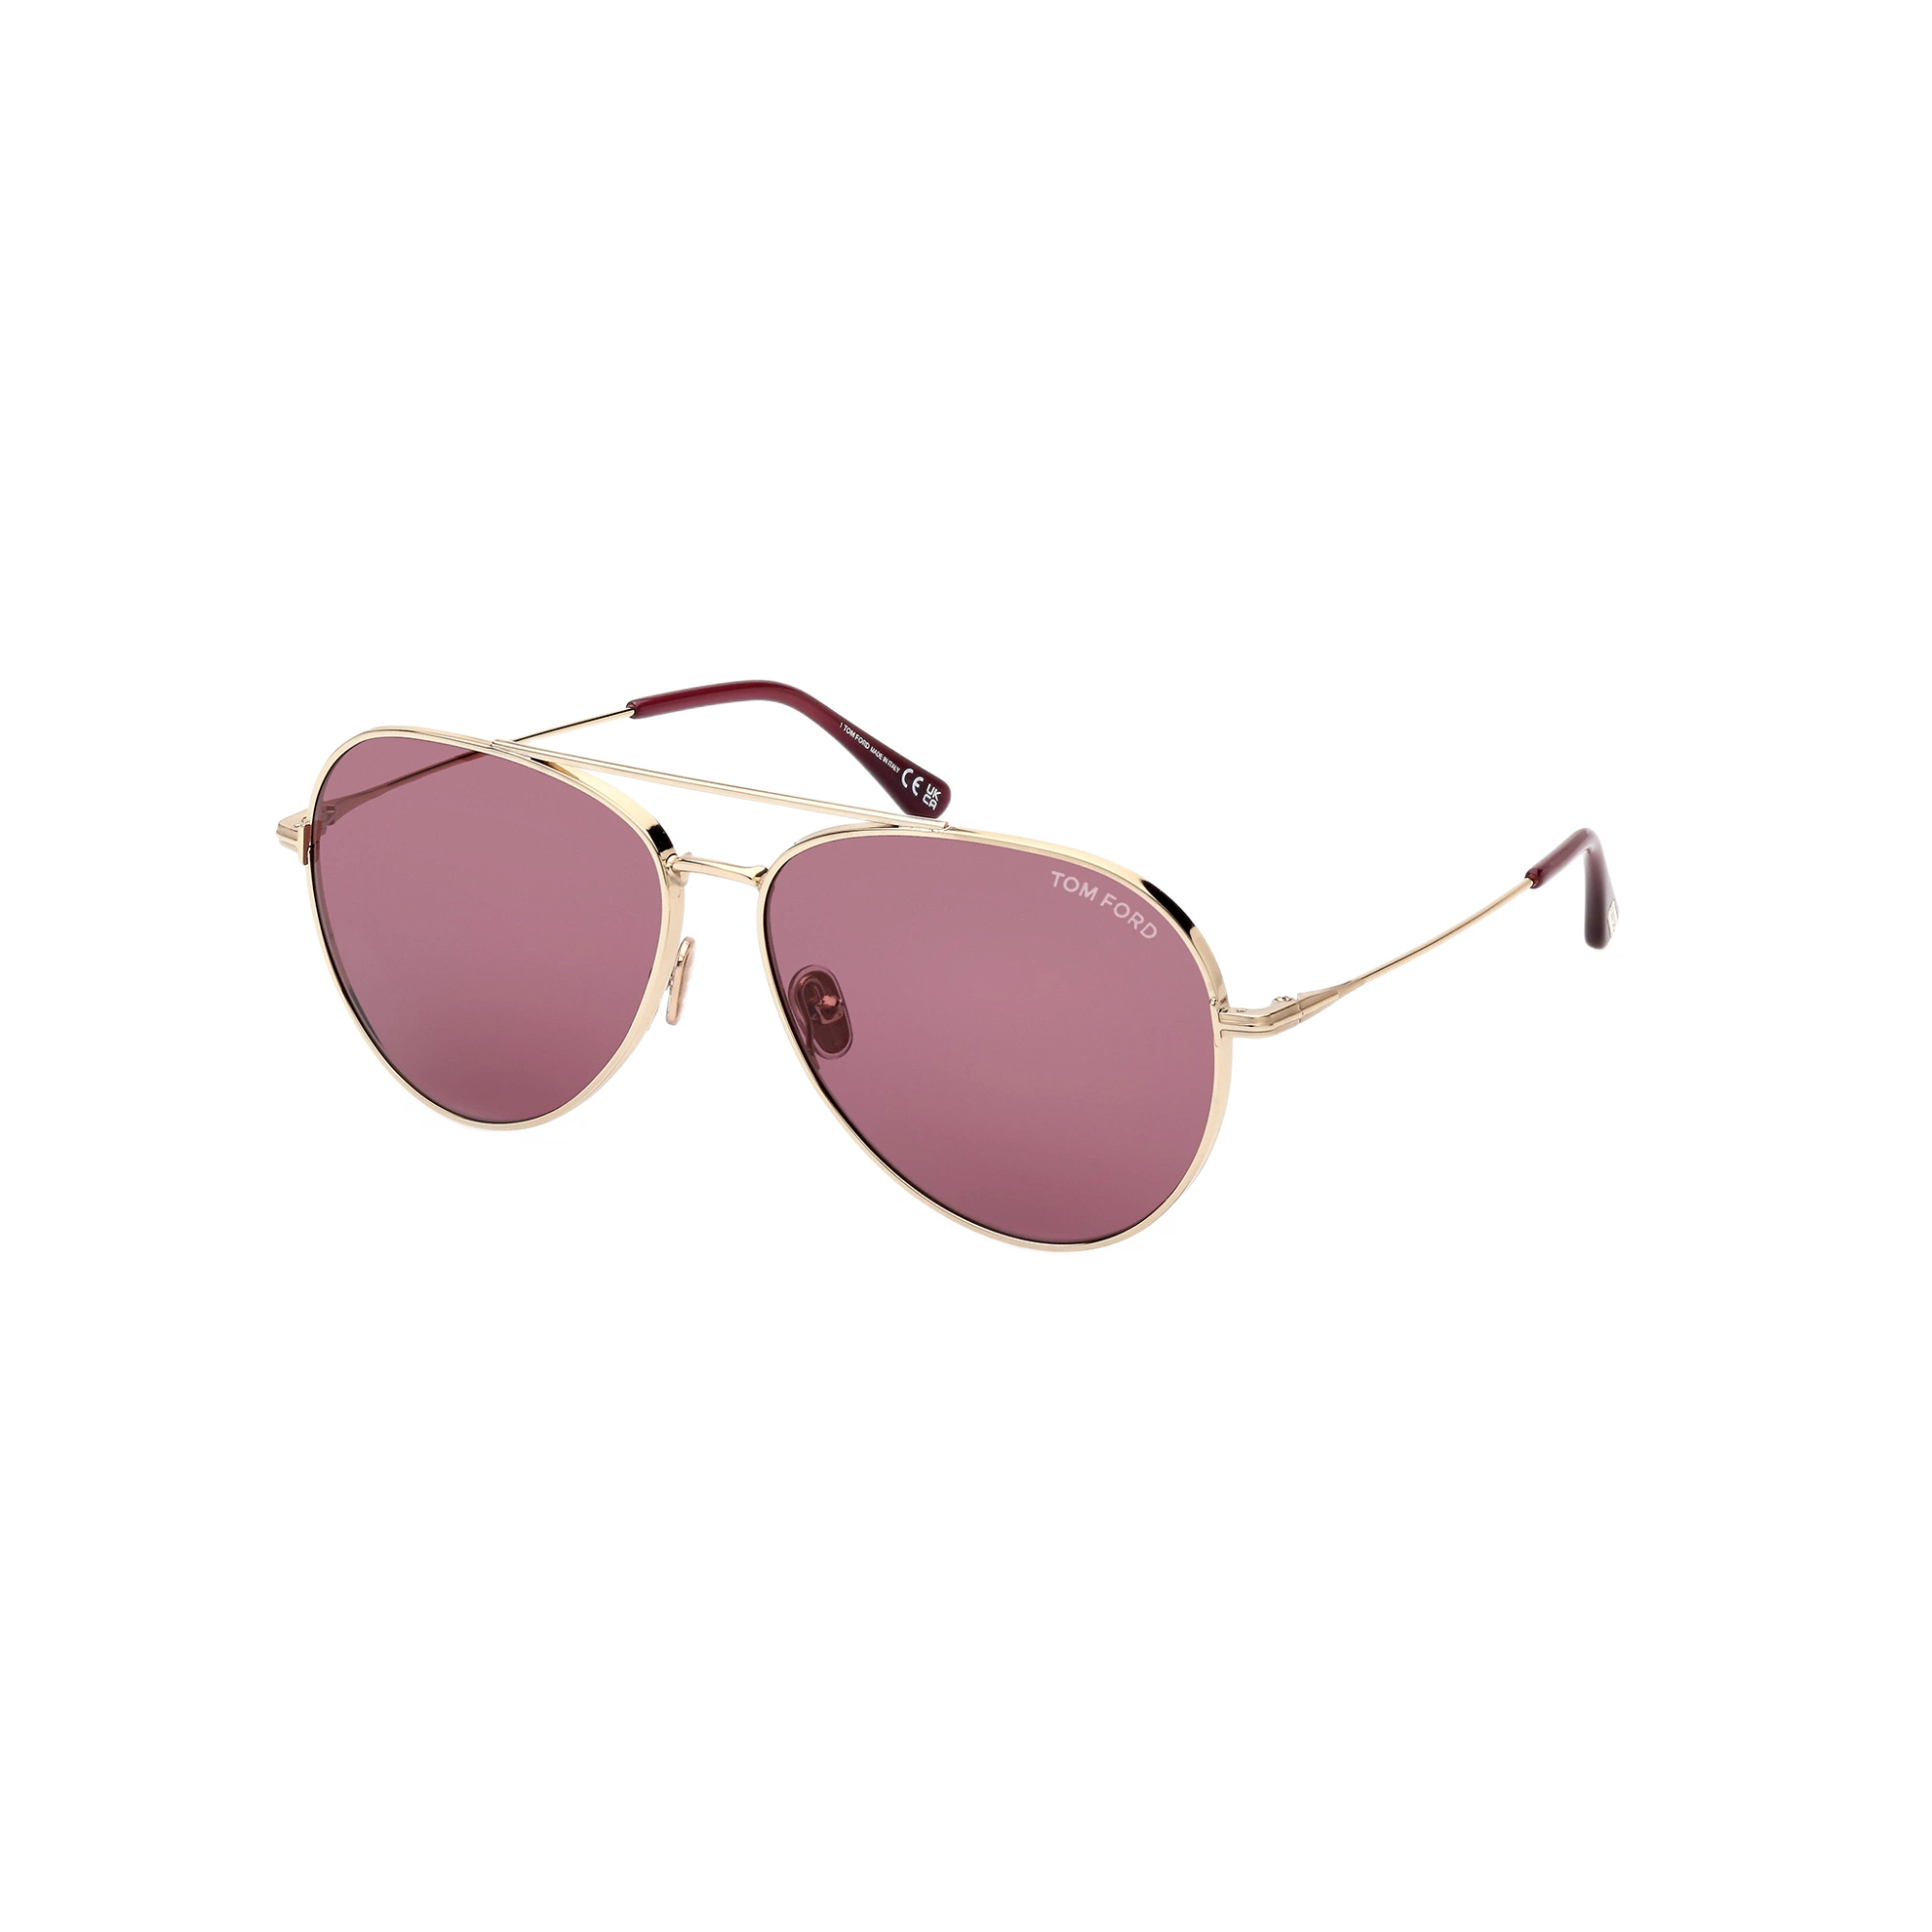 Tom Ford Sunglasses Tom Ford Sunglasses FT0996 32Y 62mm Dashel Eyeglasses Eyewear UK USA Australia 